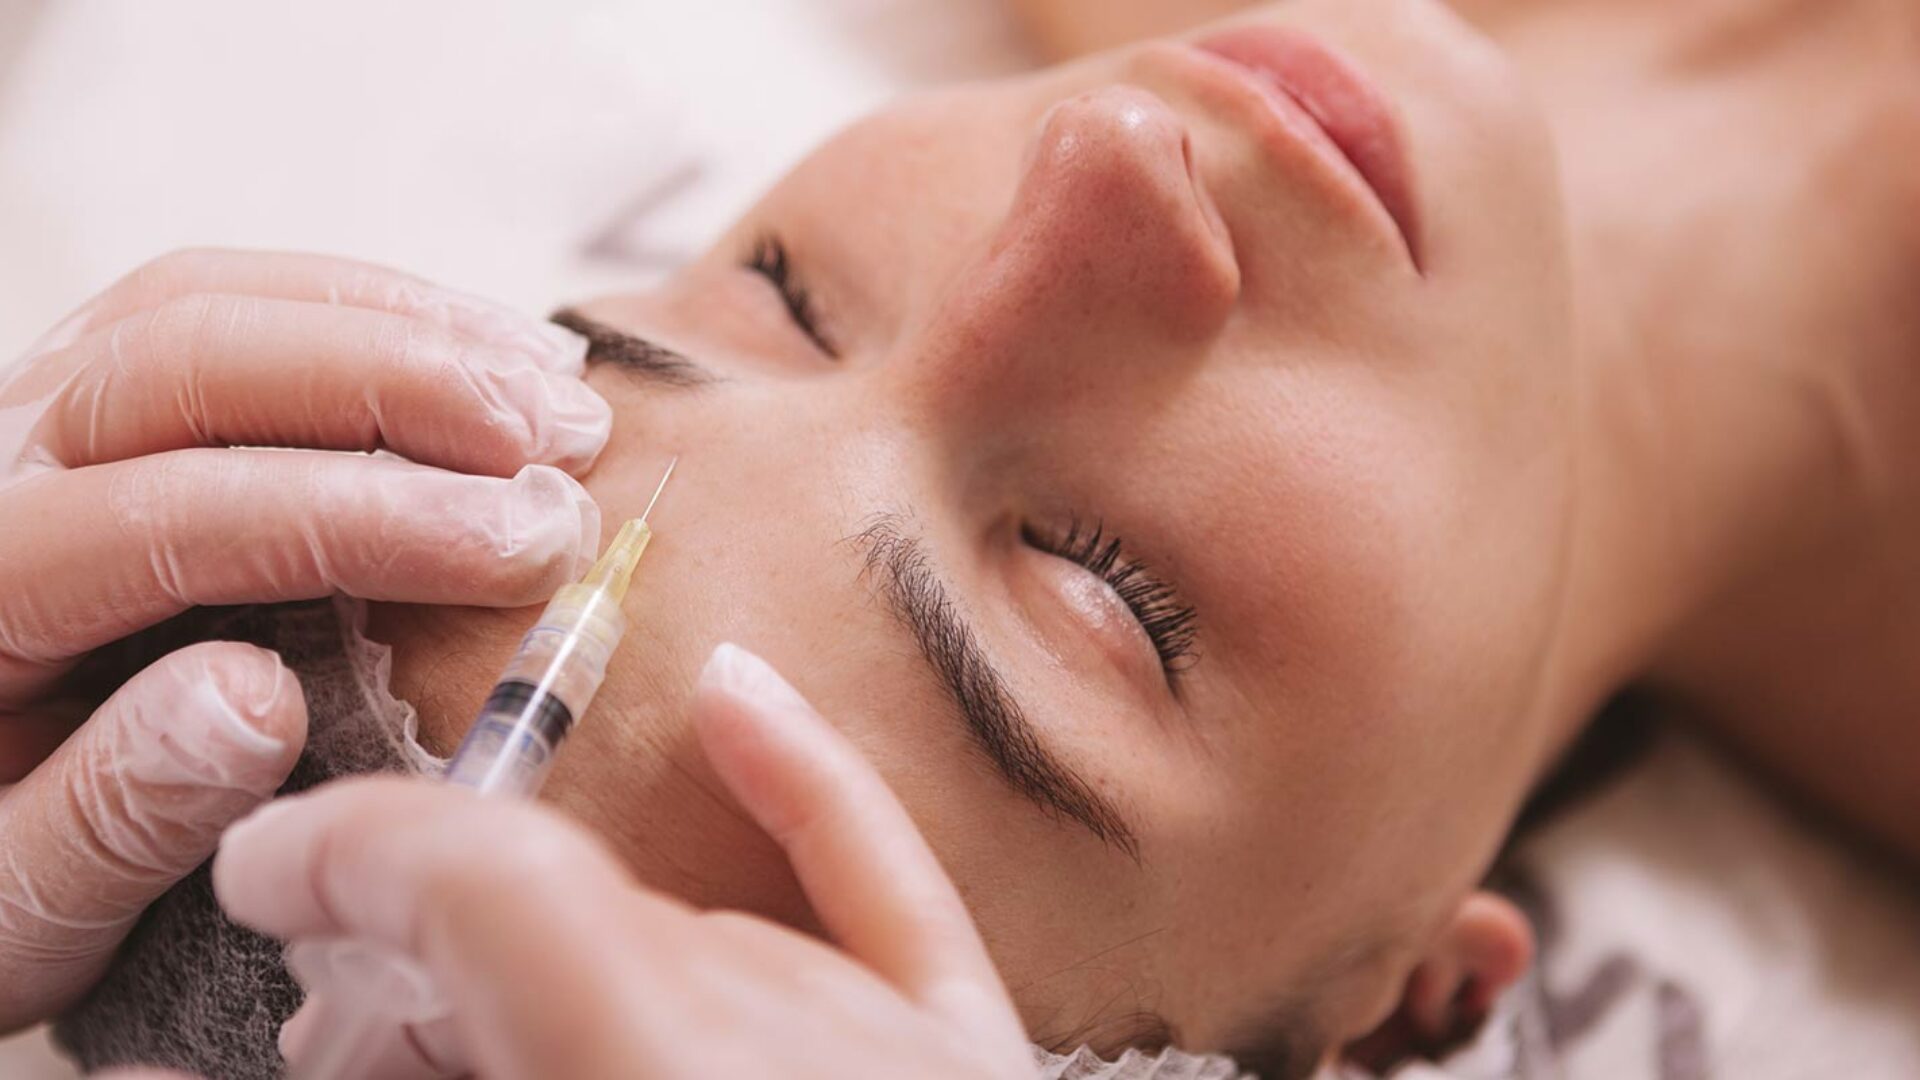 Faltenbehandlung mit Botox(Botulinumtoxin) beim Hautarzt